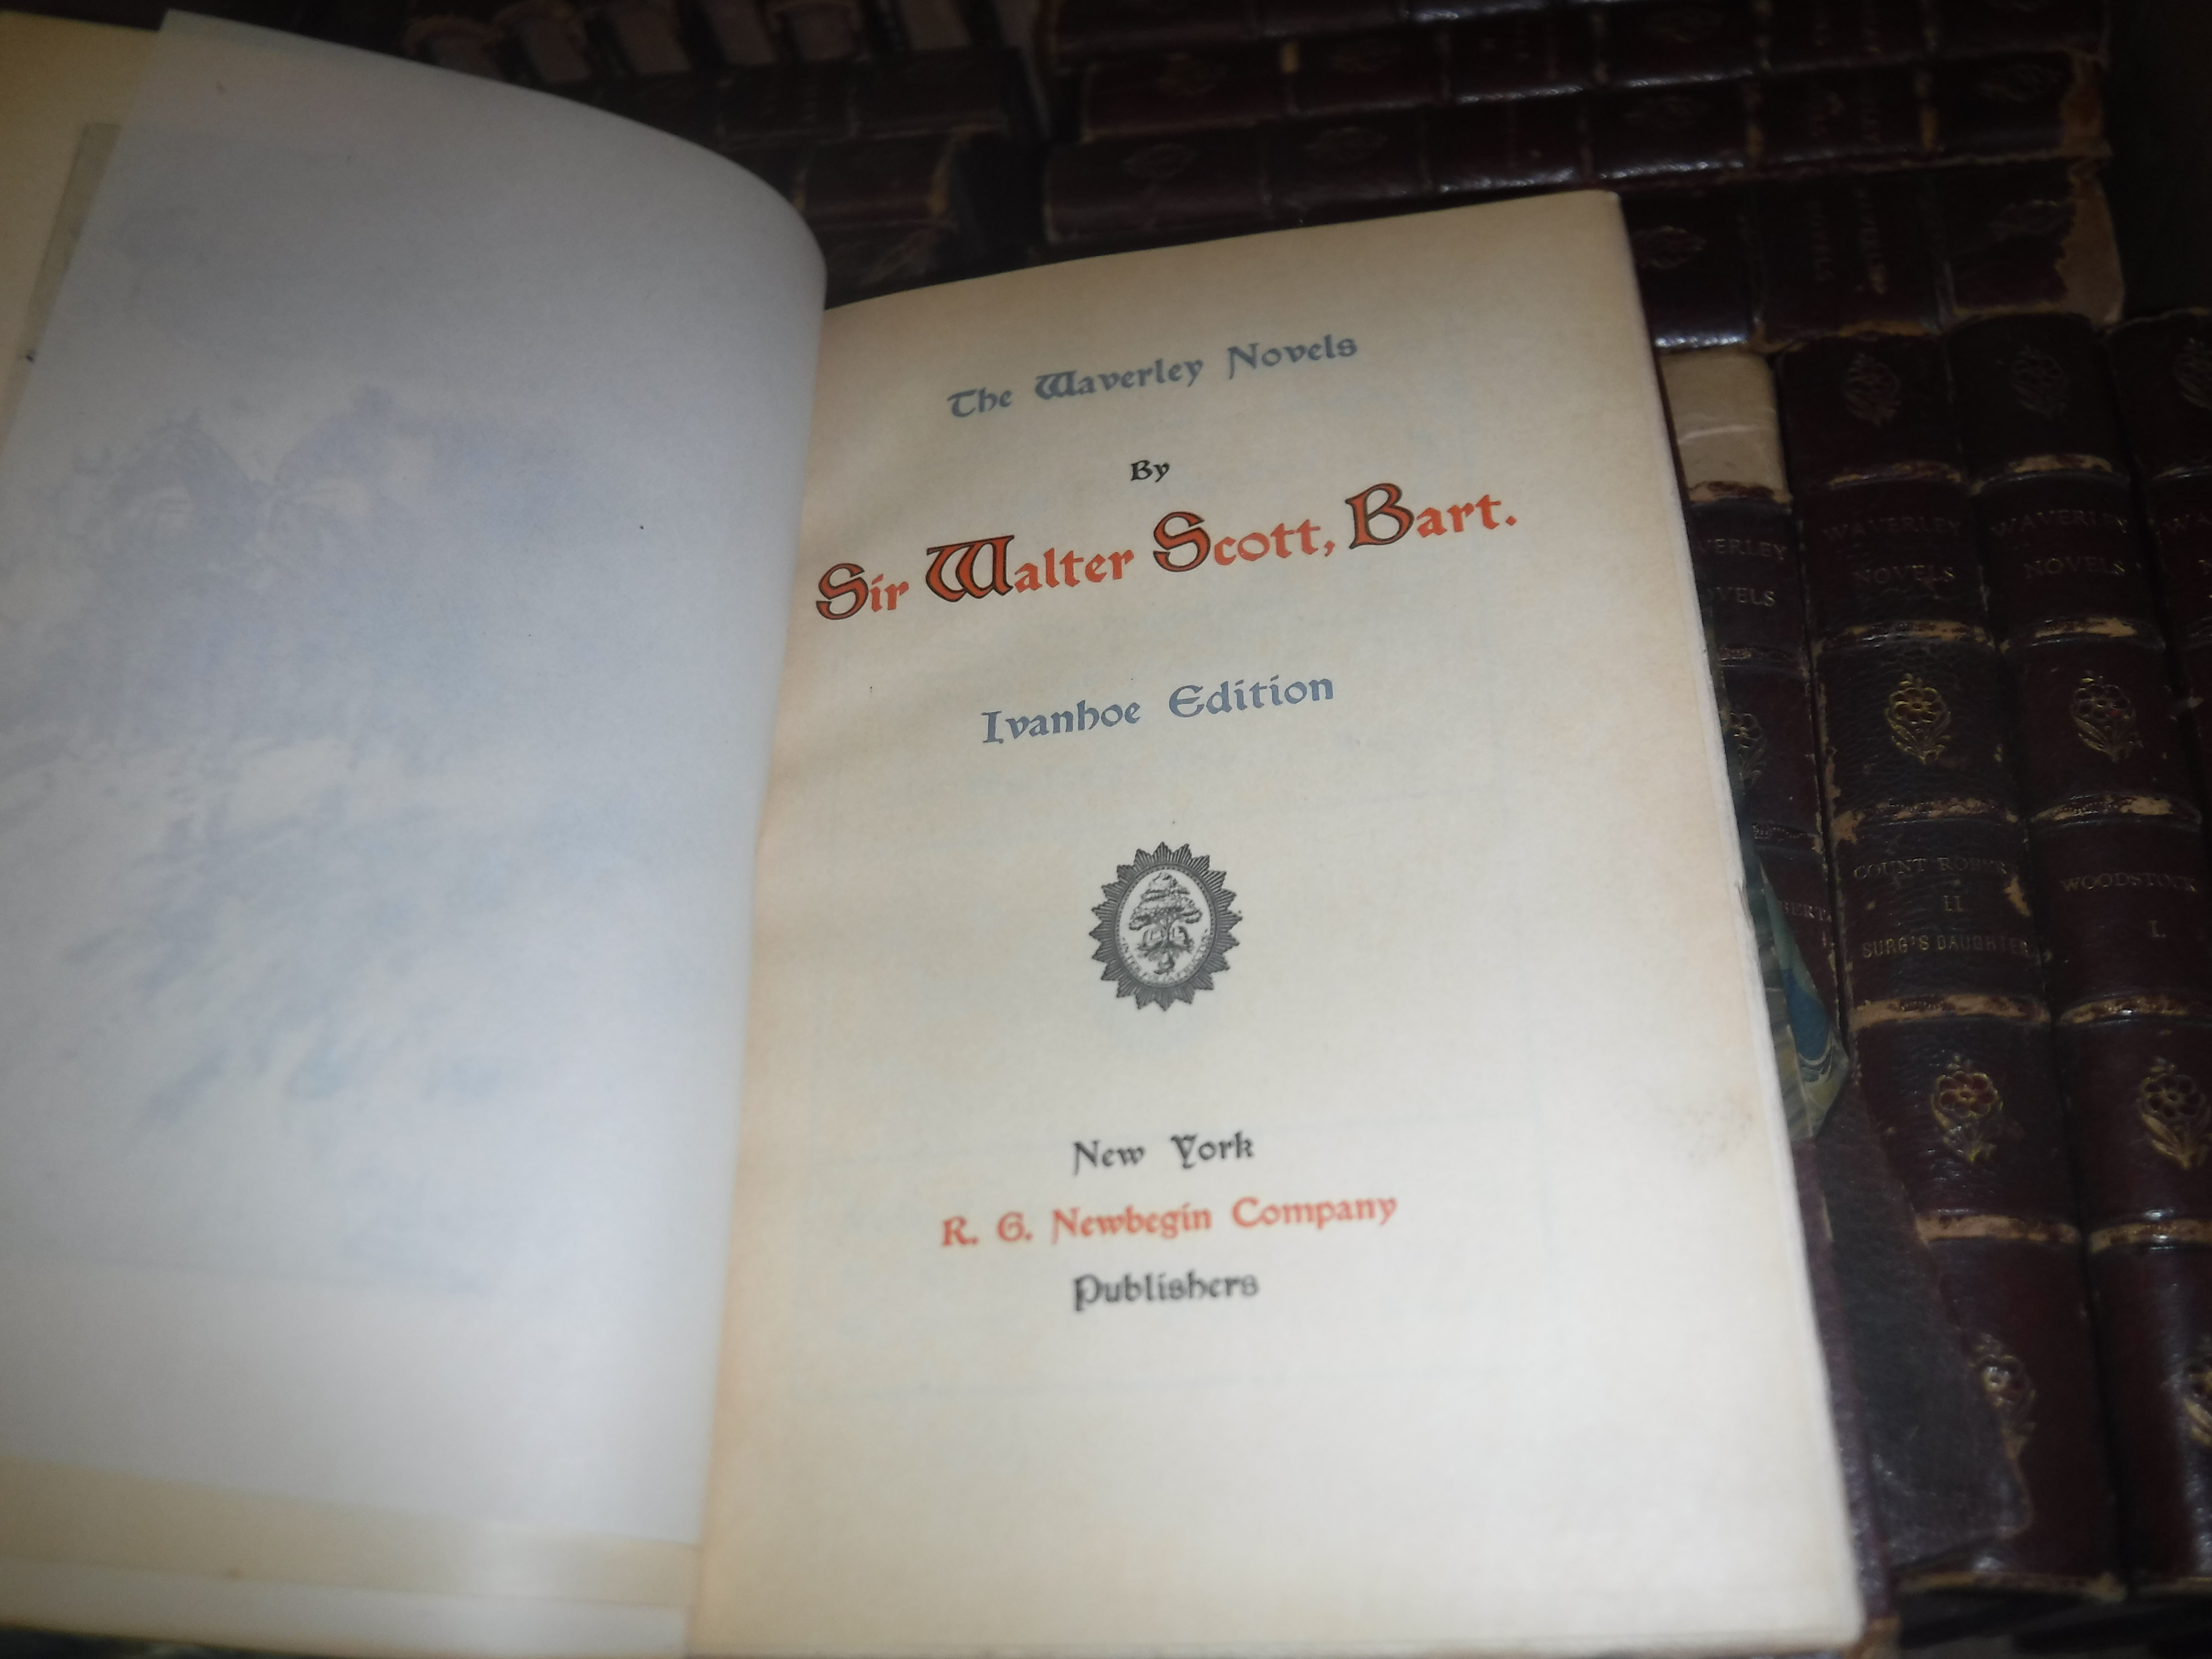 SIR WALTER SCOTT "The Waverley Novels", Ivanhoe edition, published R G Newbiggin Co. New York,